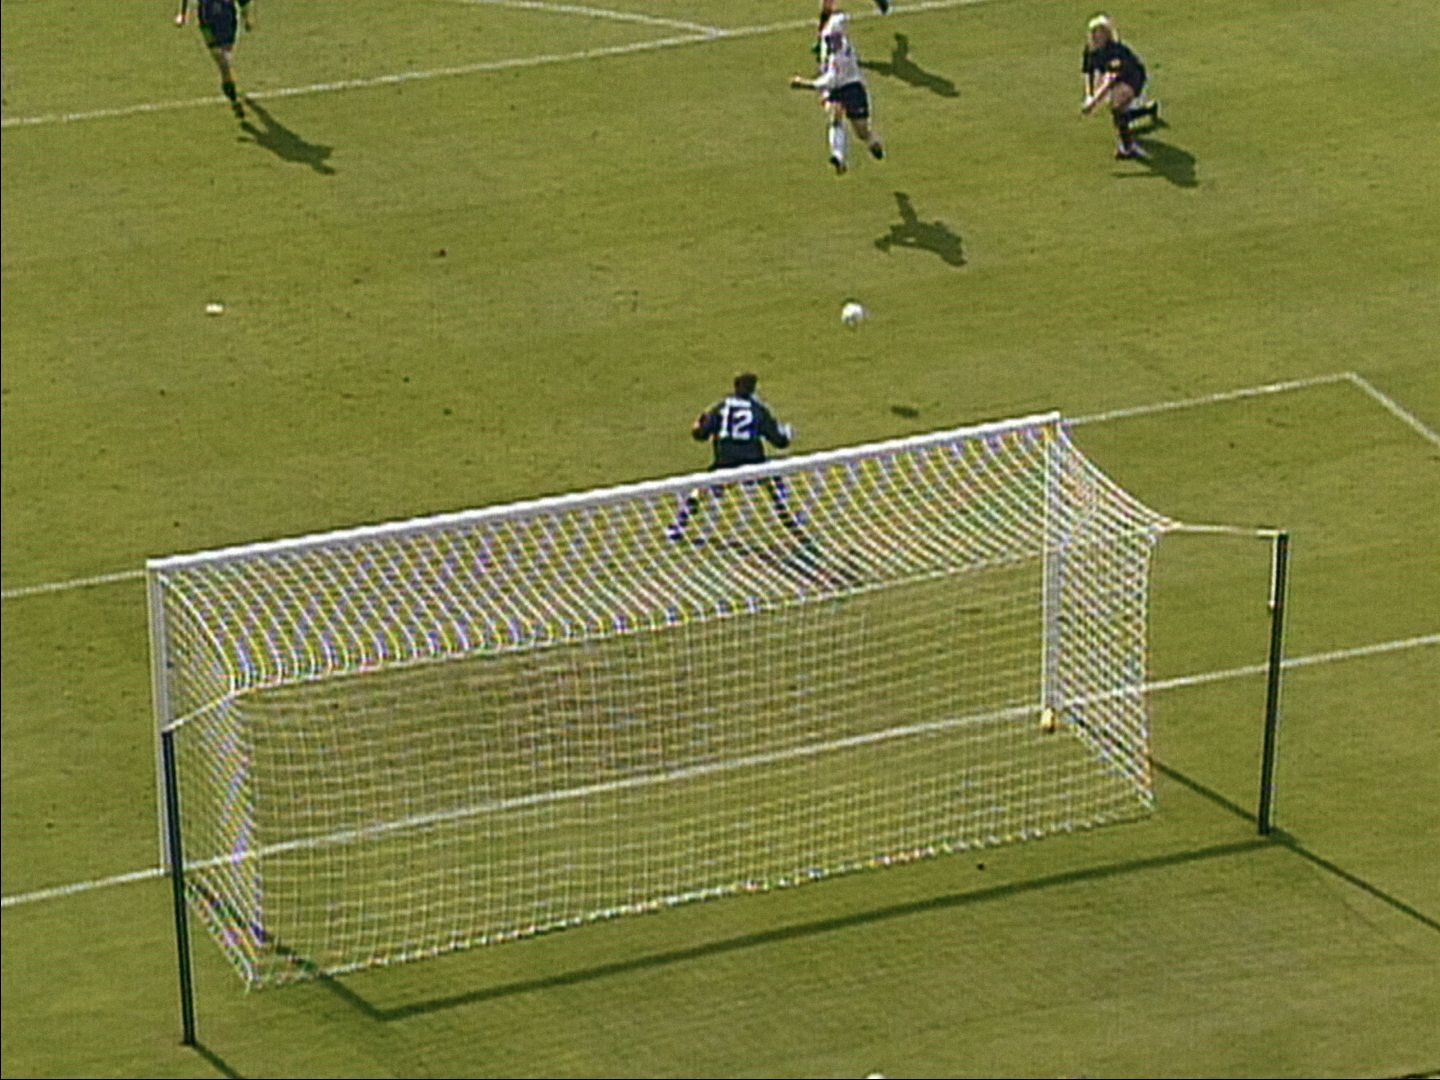 UEFA - Paul Gascoigne's goal vs Scotland at Wembley, Euro 96